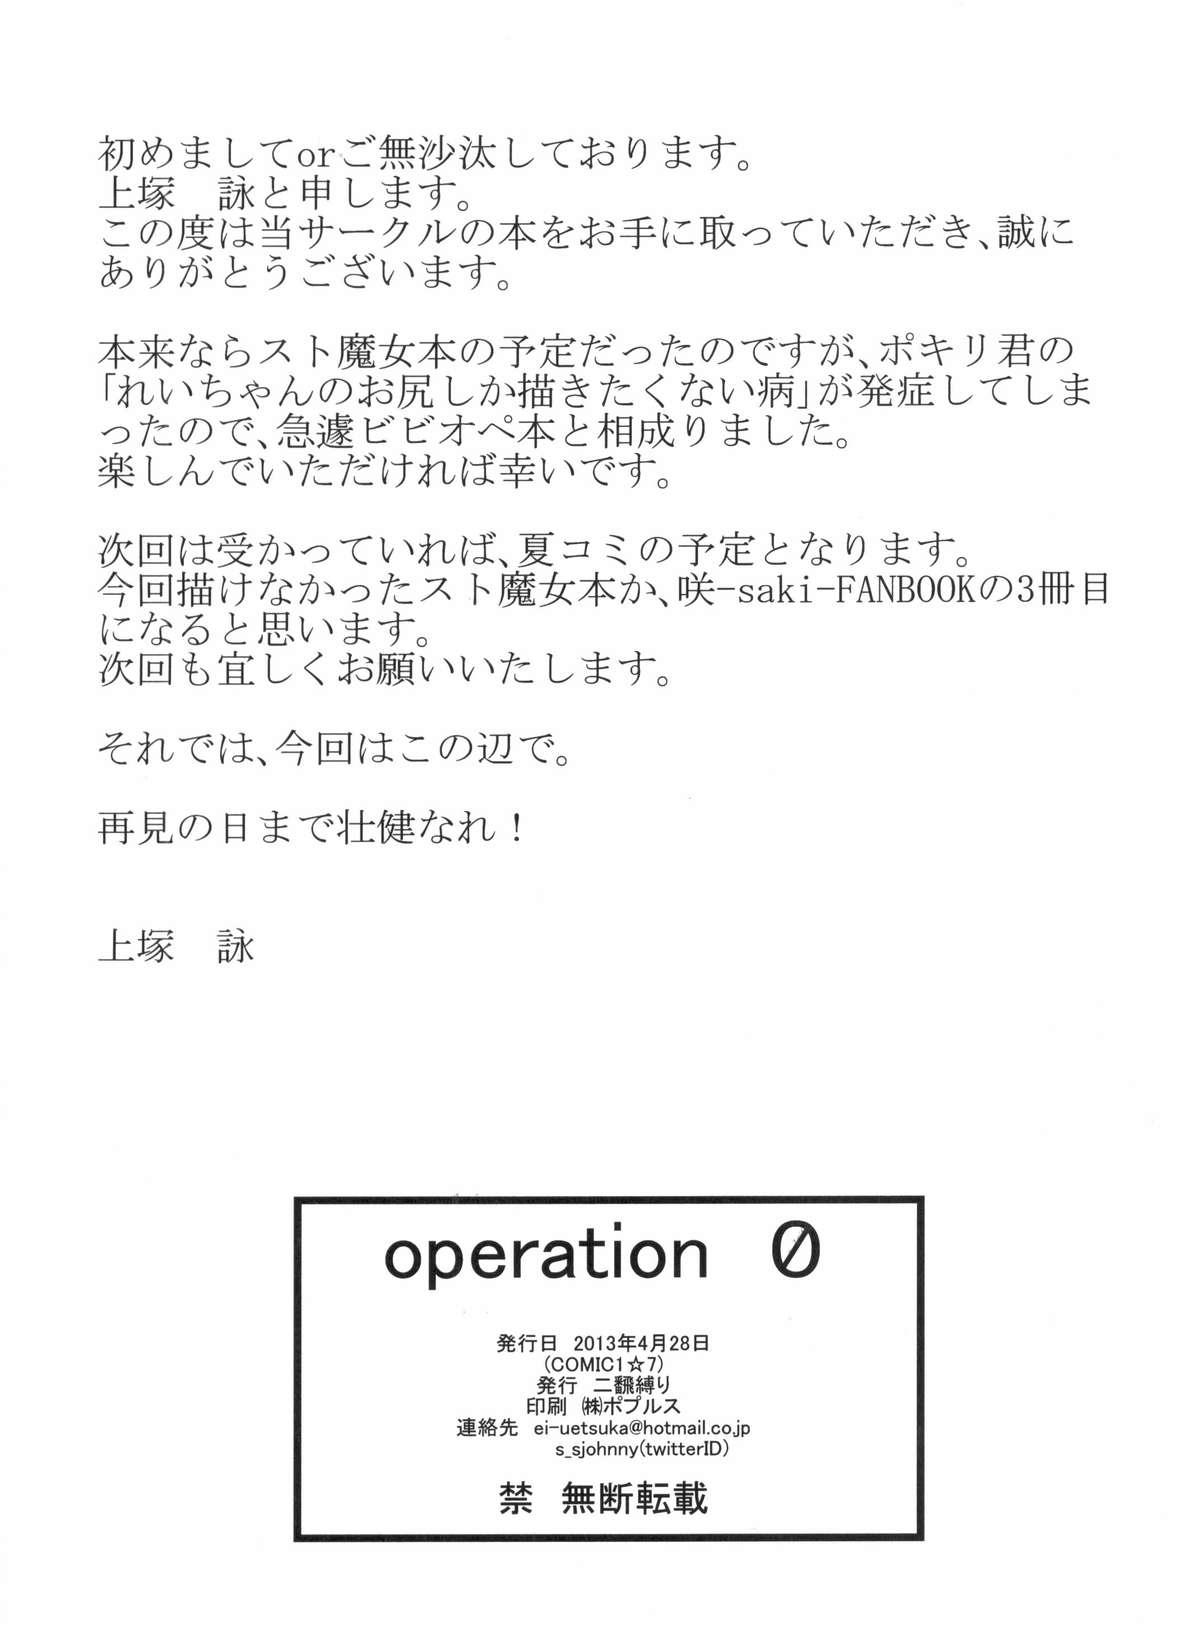 operation 0 21